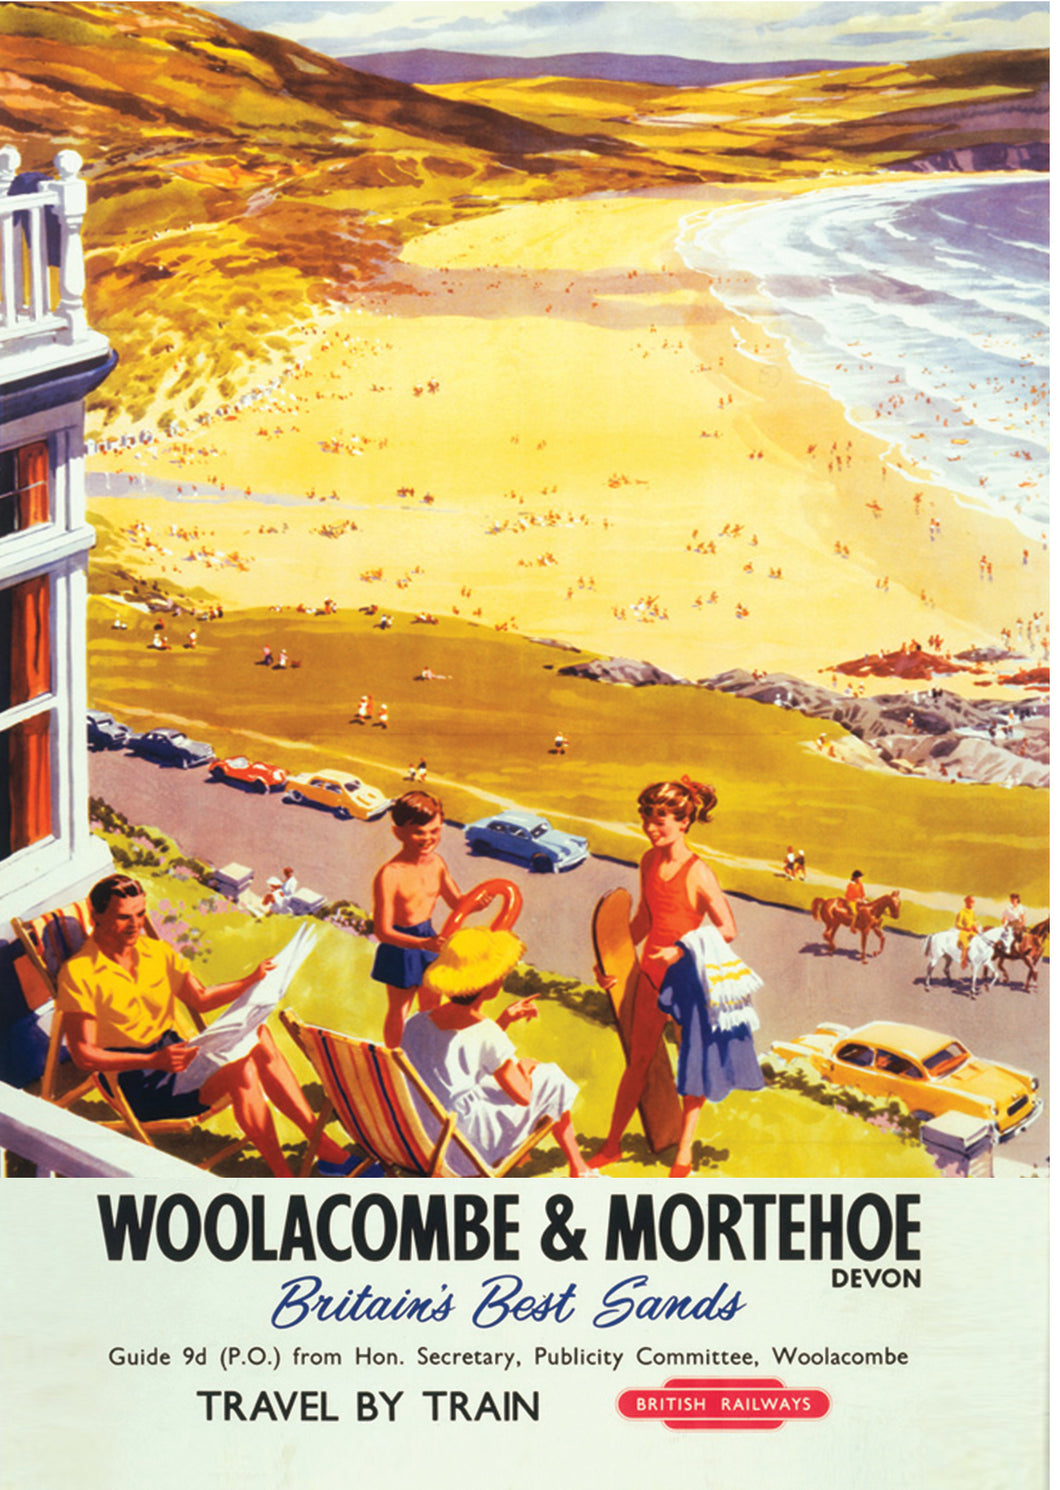 Woolacombe and Mortehoe, Devon, Travel By Train, British Railways - Greeting Card